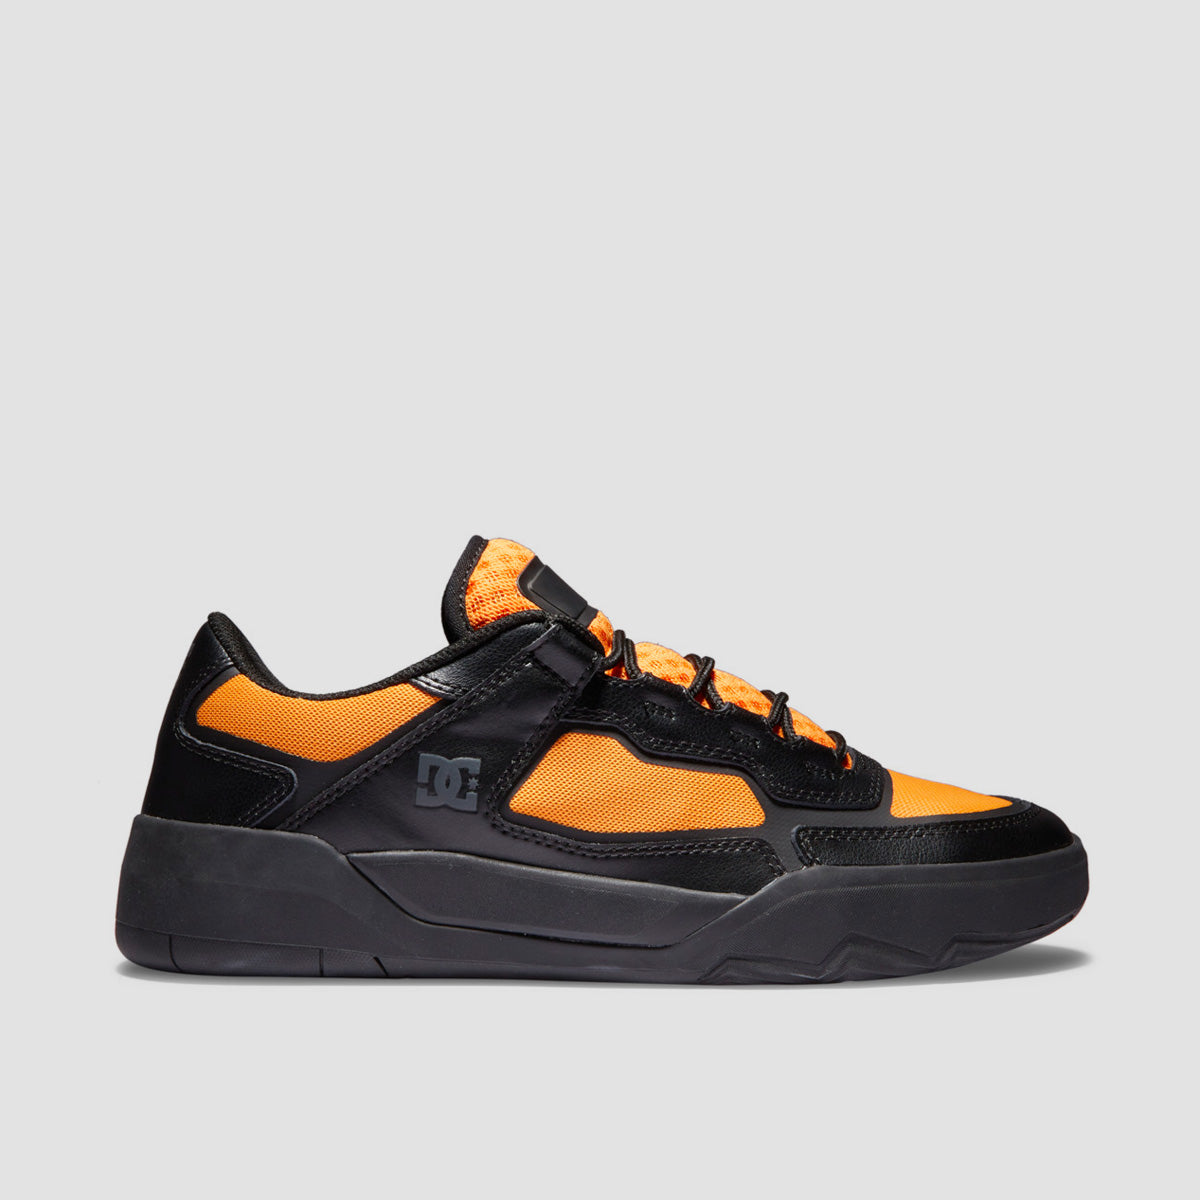 DC Metric S Shoes - Black/Black/Orange